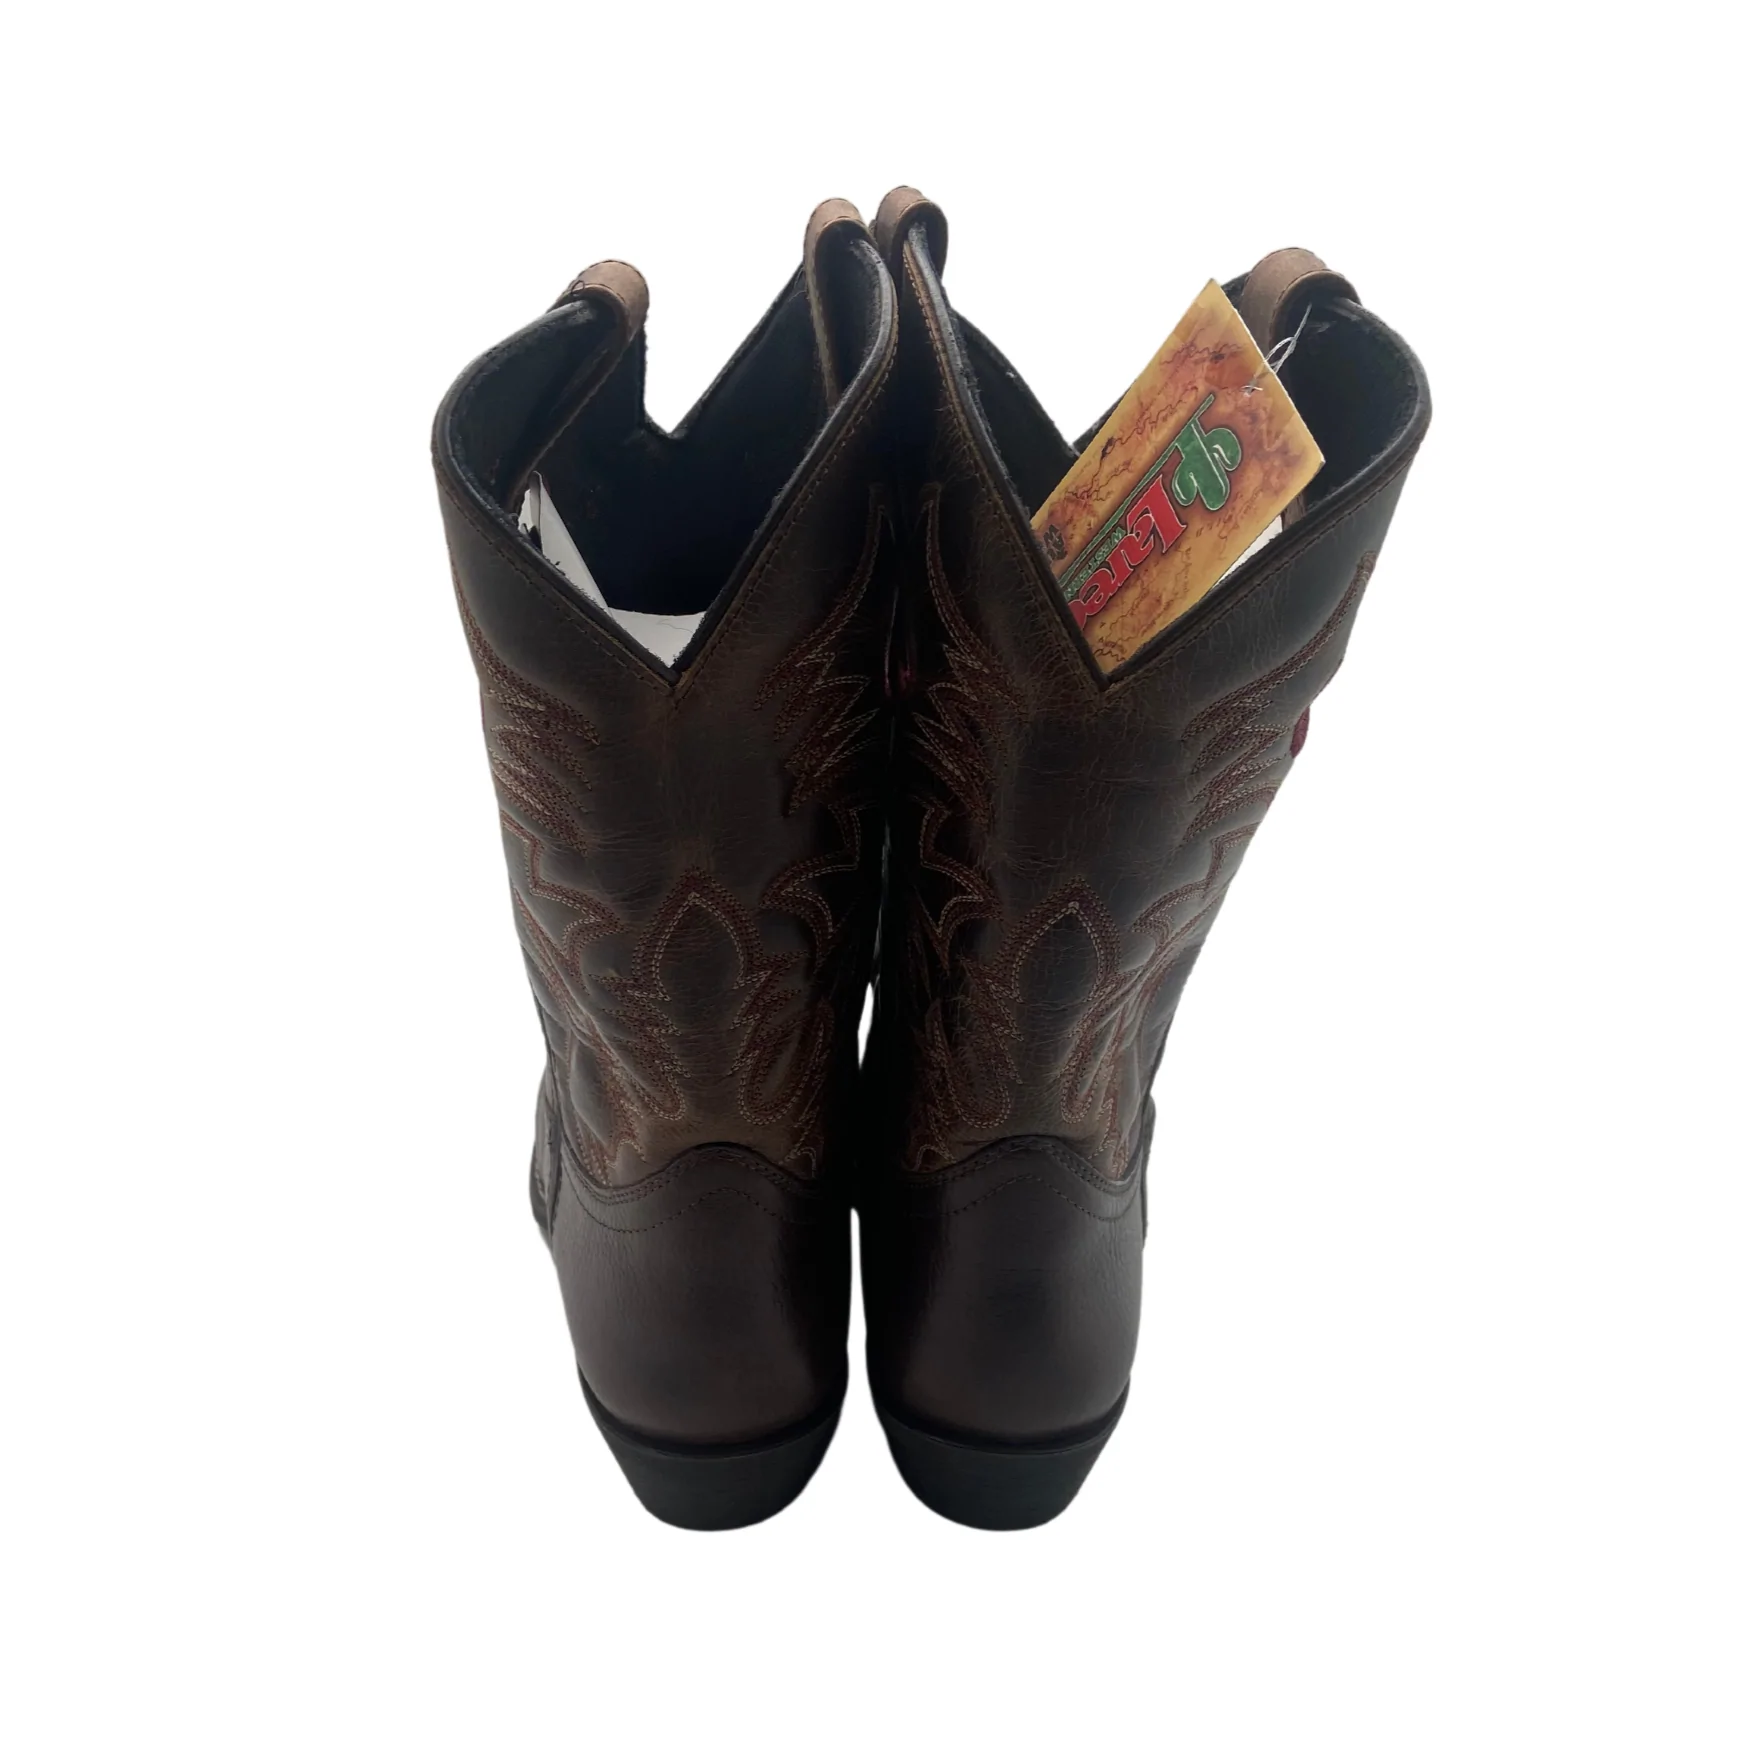 Laredo: Men's Cowboy Boots / Square Toe / Dark Brown / Western / Size 12